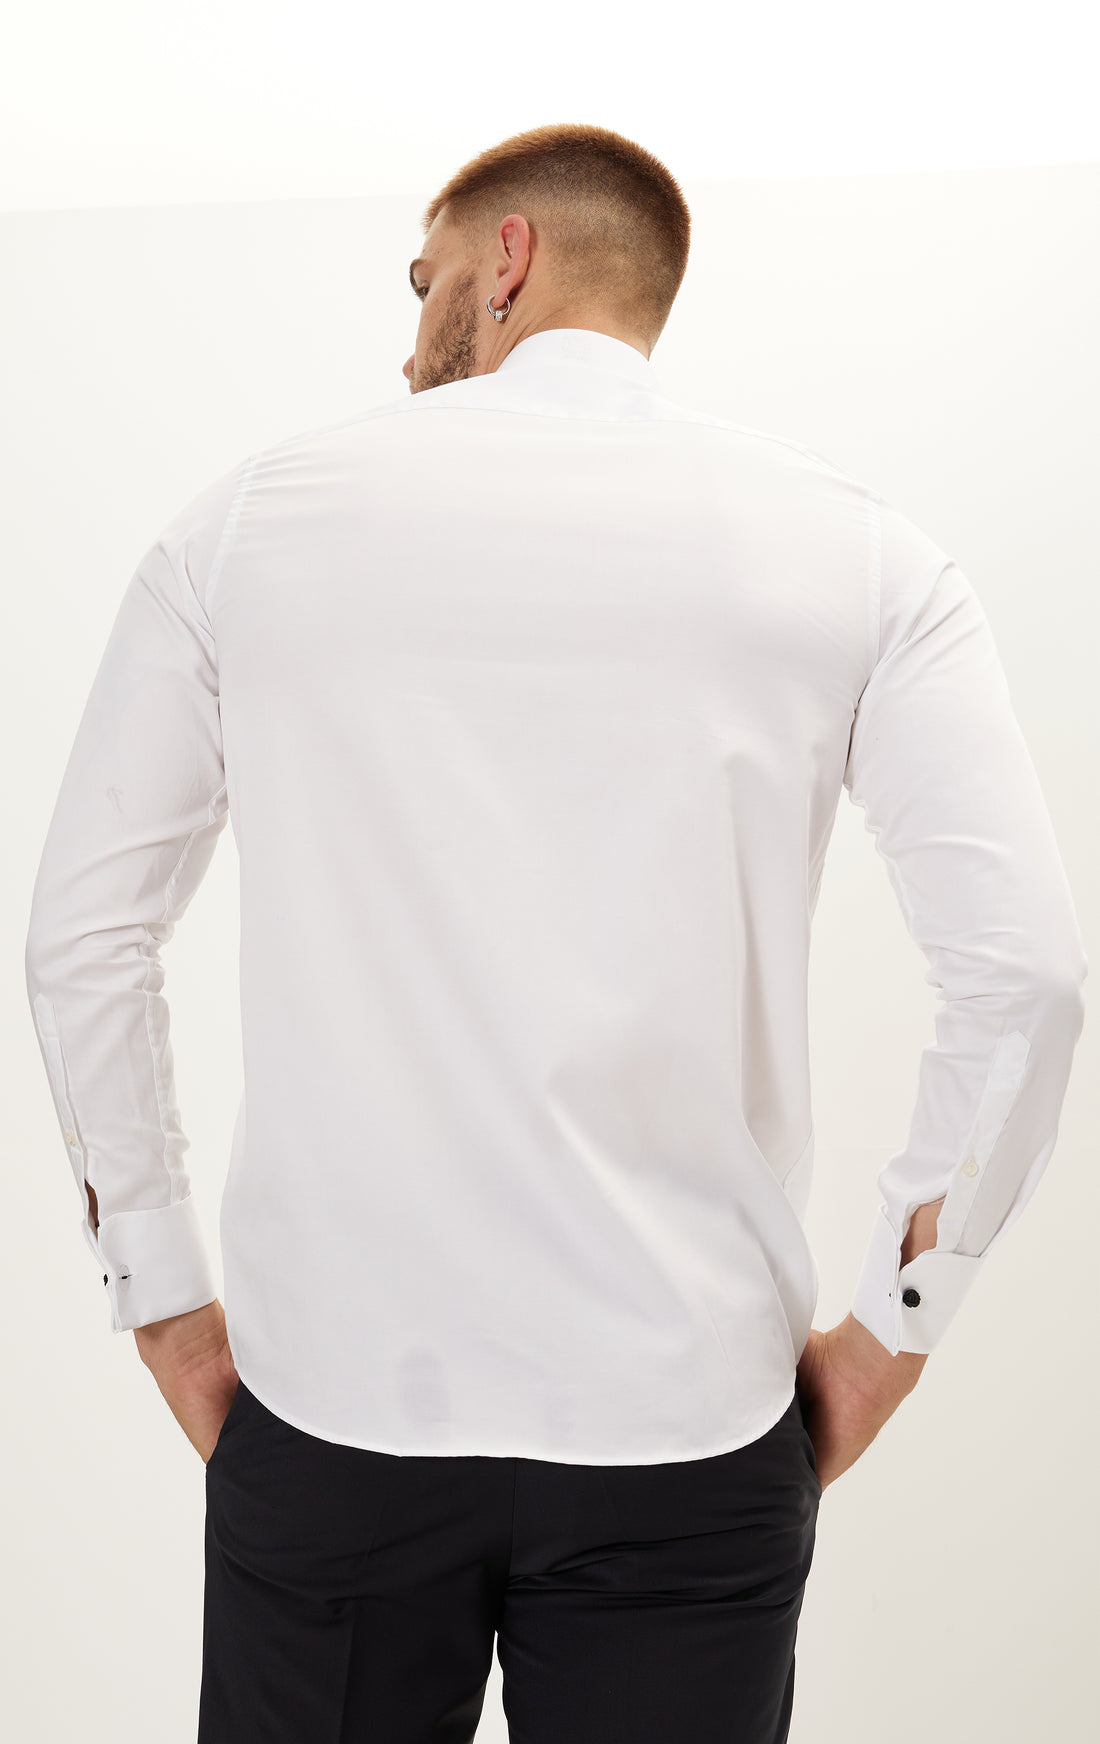 Lurex Paneled Spread Kragen Shirt - WEISS GRAU